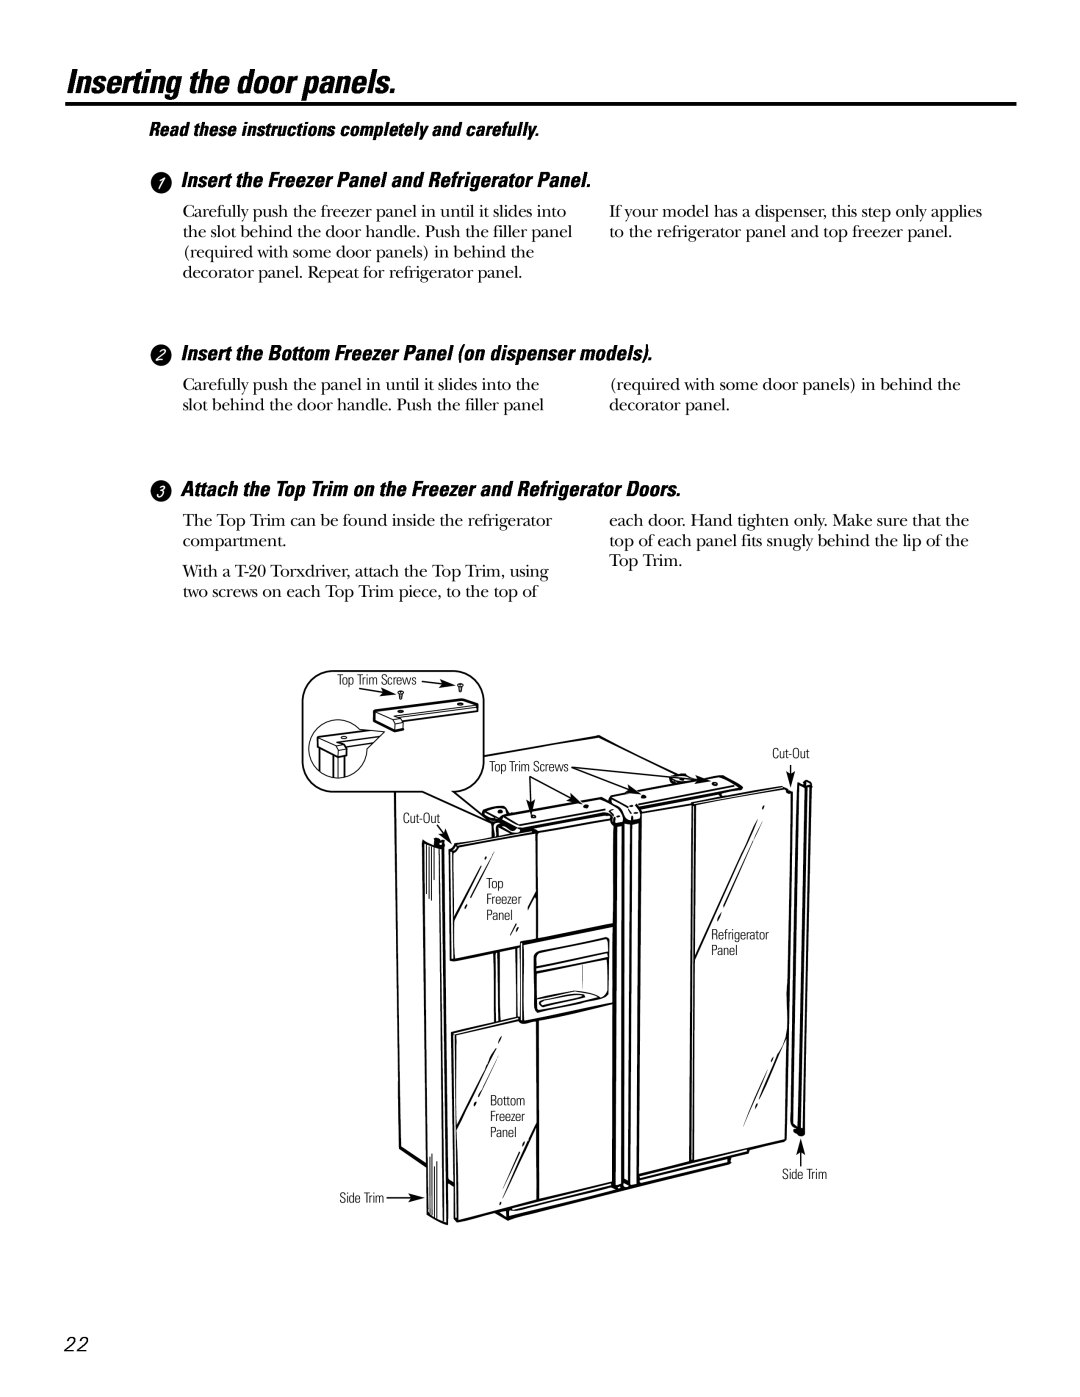 GE 200D2600P031 operating instructions Inserting the door panels, Insert the Bottom Freezer Panel on dispenser models 